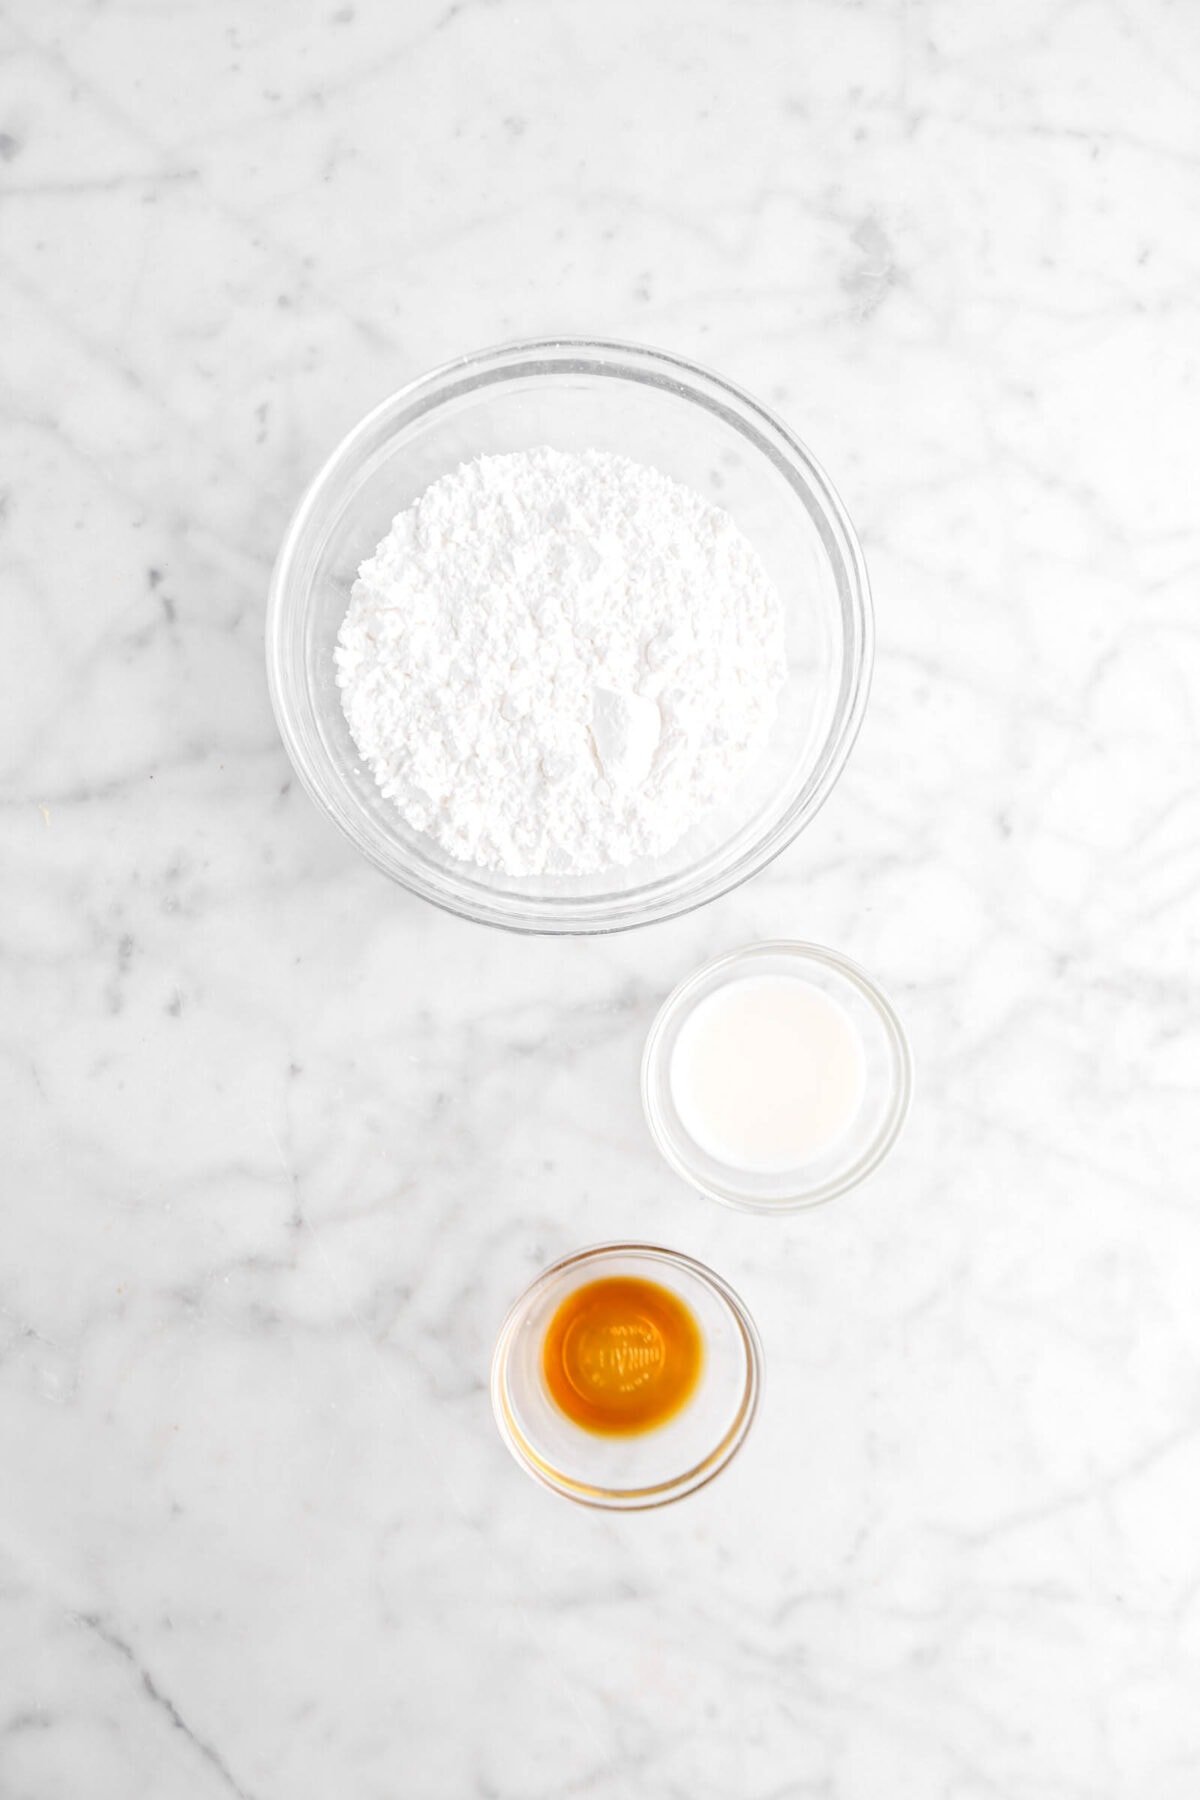 powdered sugar, milk, and vanilla on marble surface